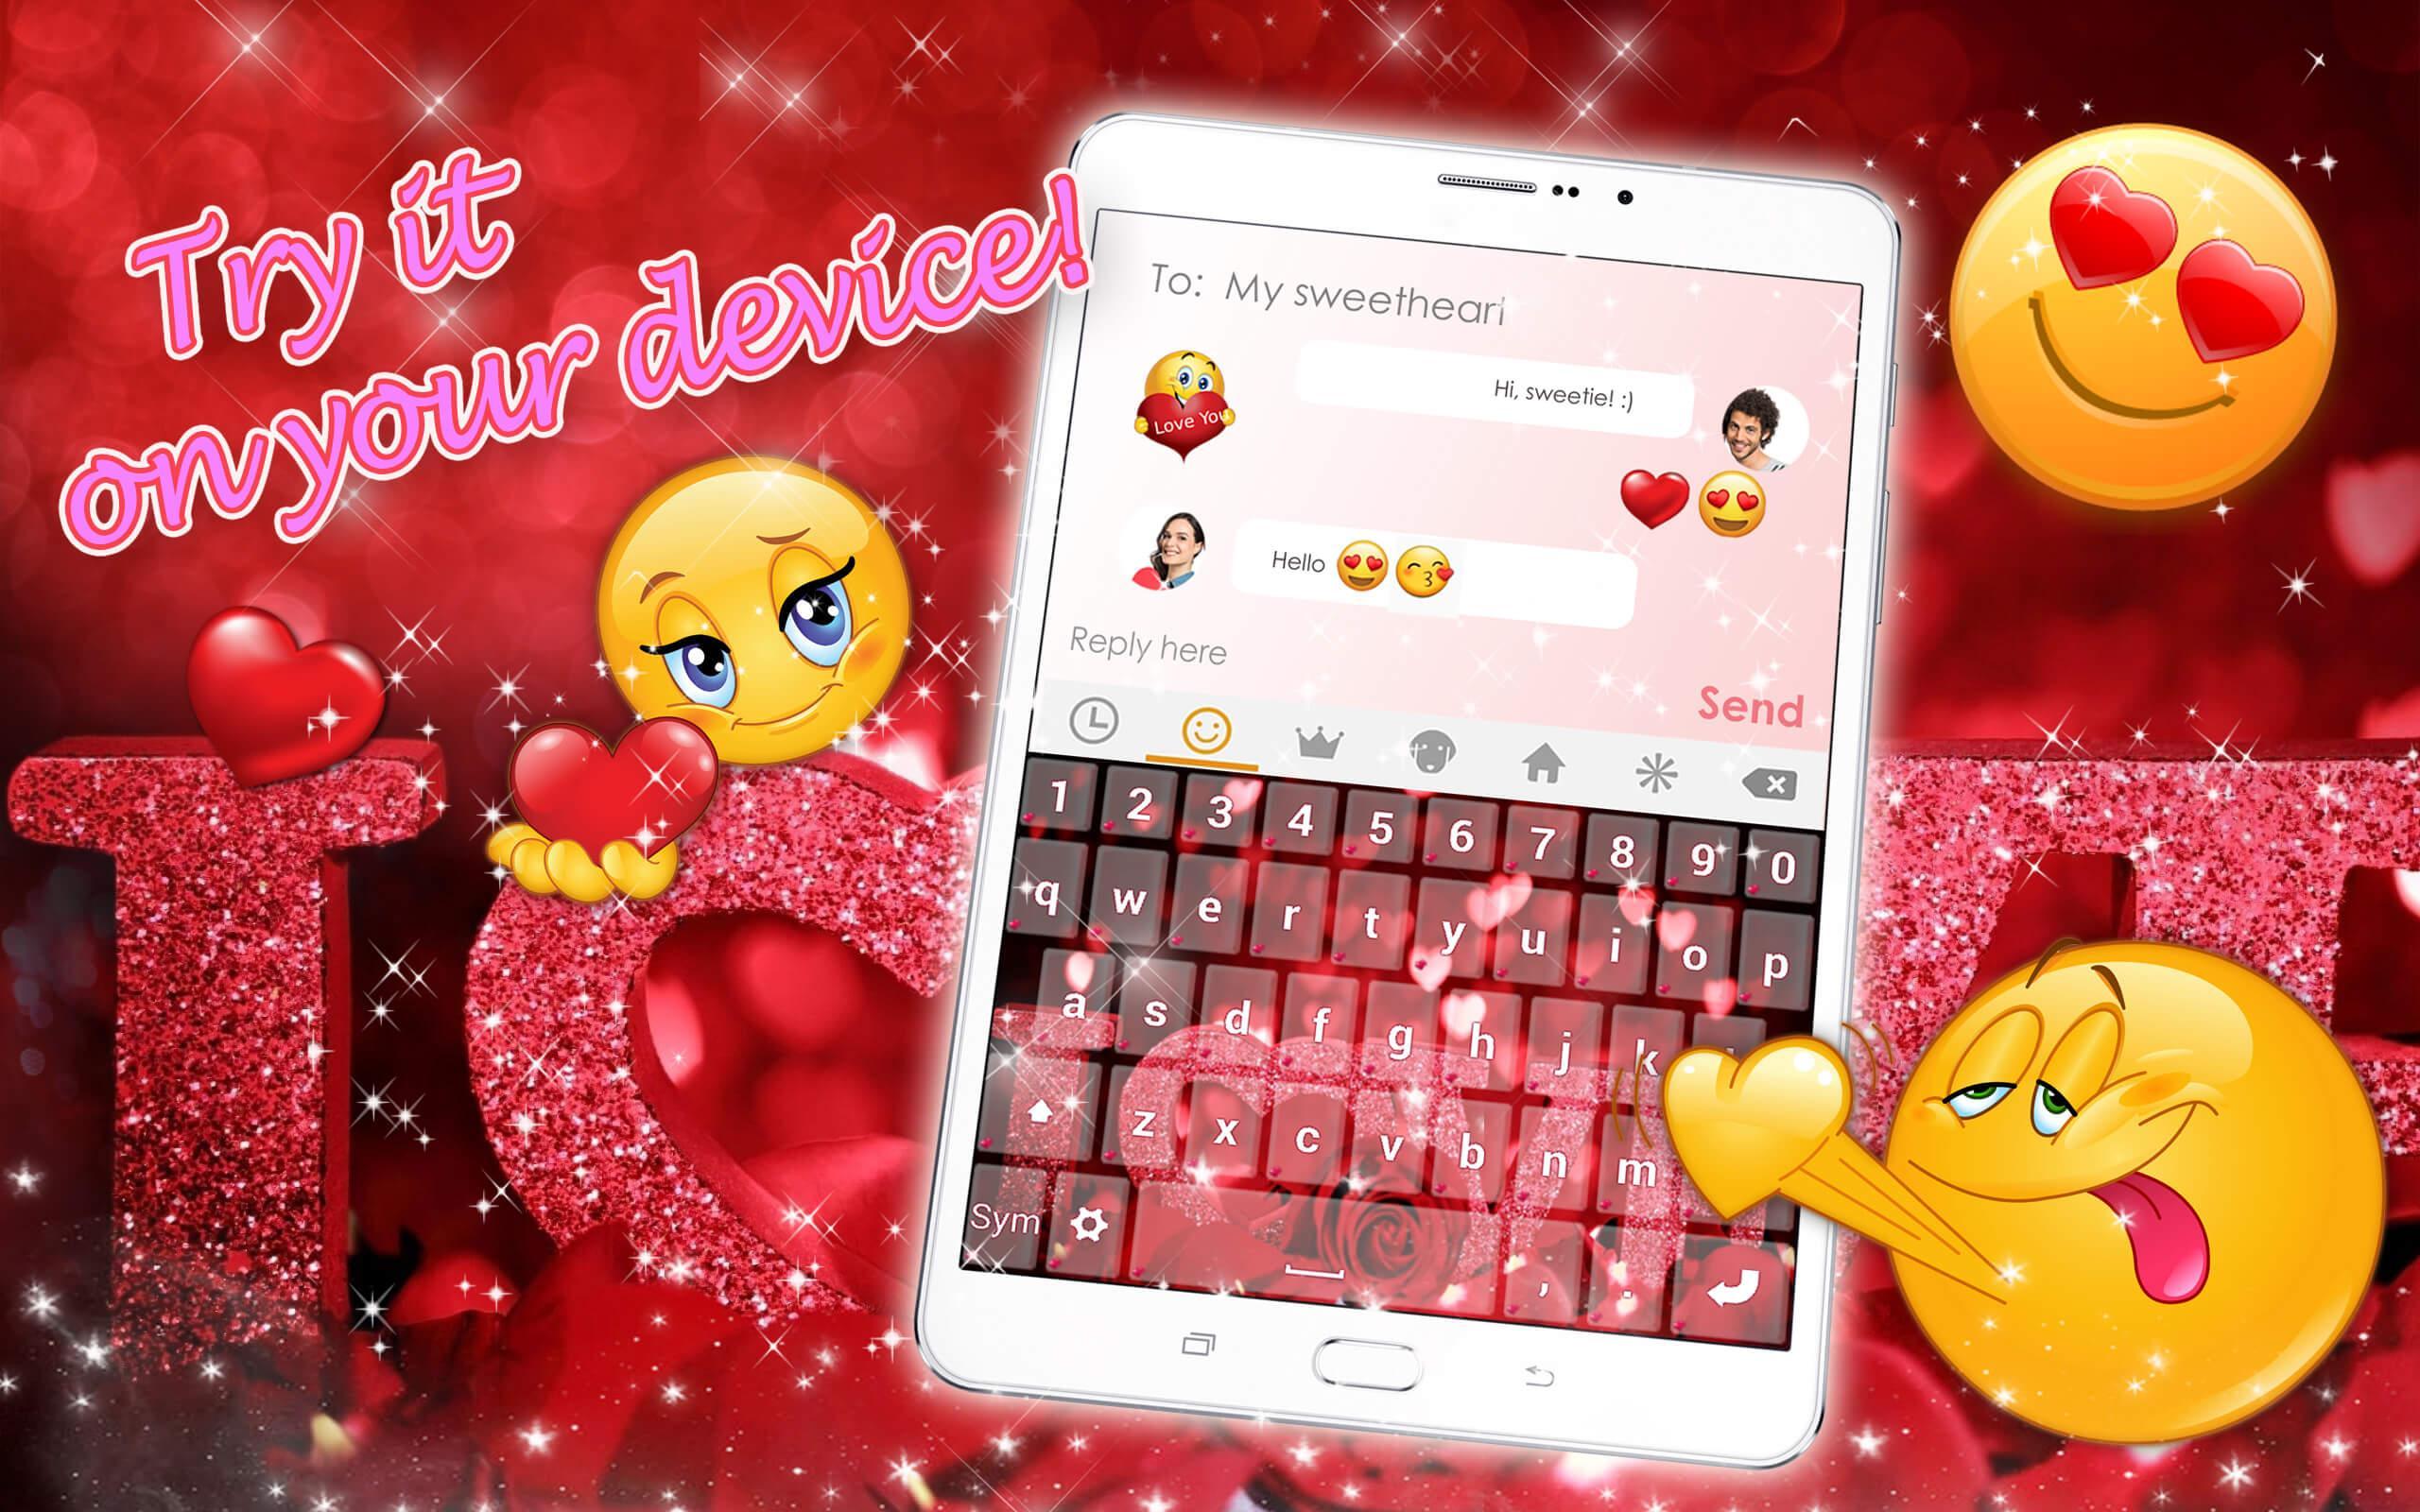 Android 用の 愛 キーボード キーボード 顔文字 Apk をダウンロード